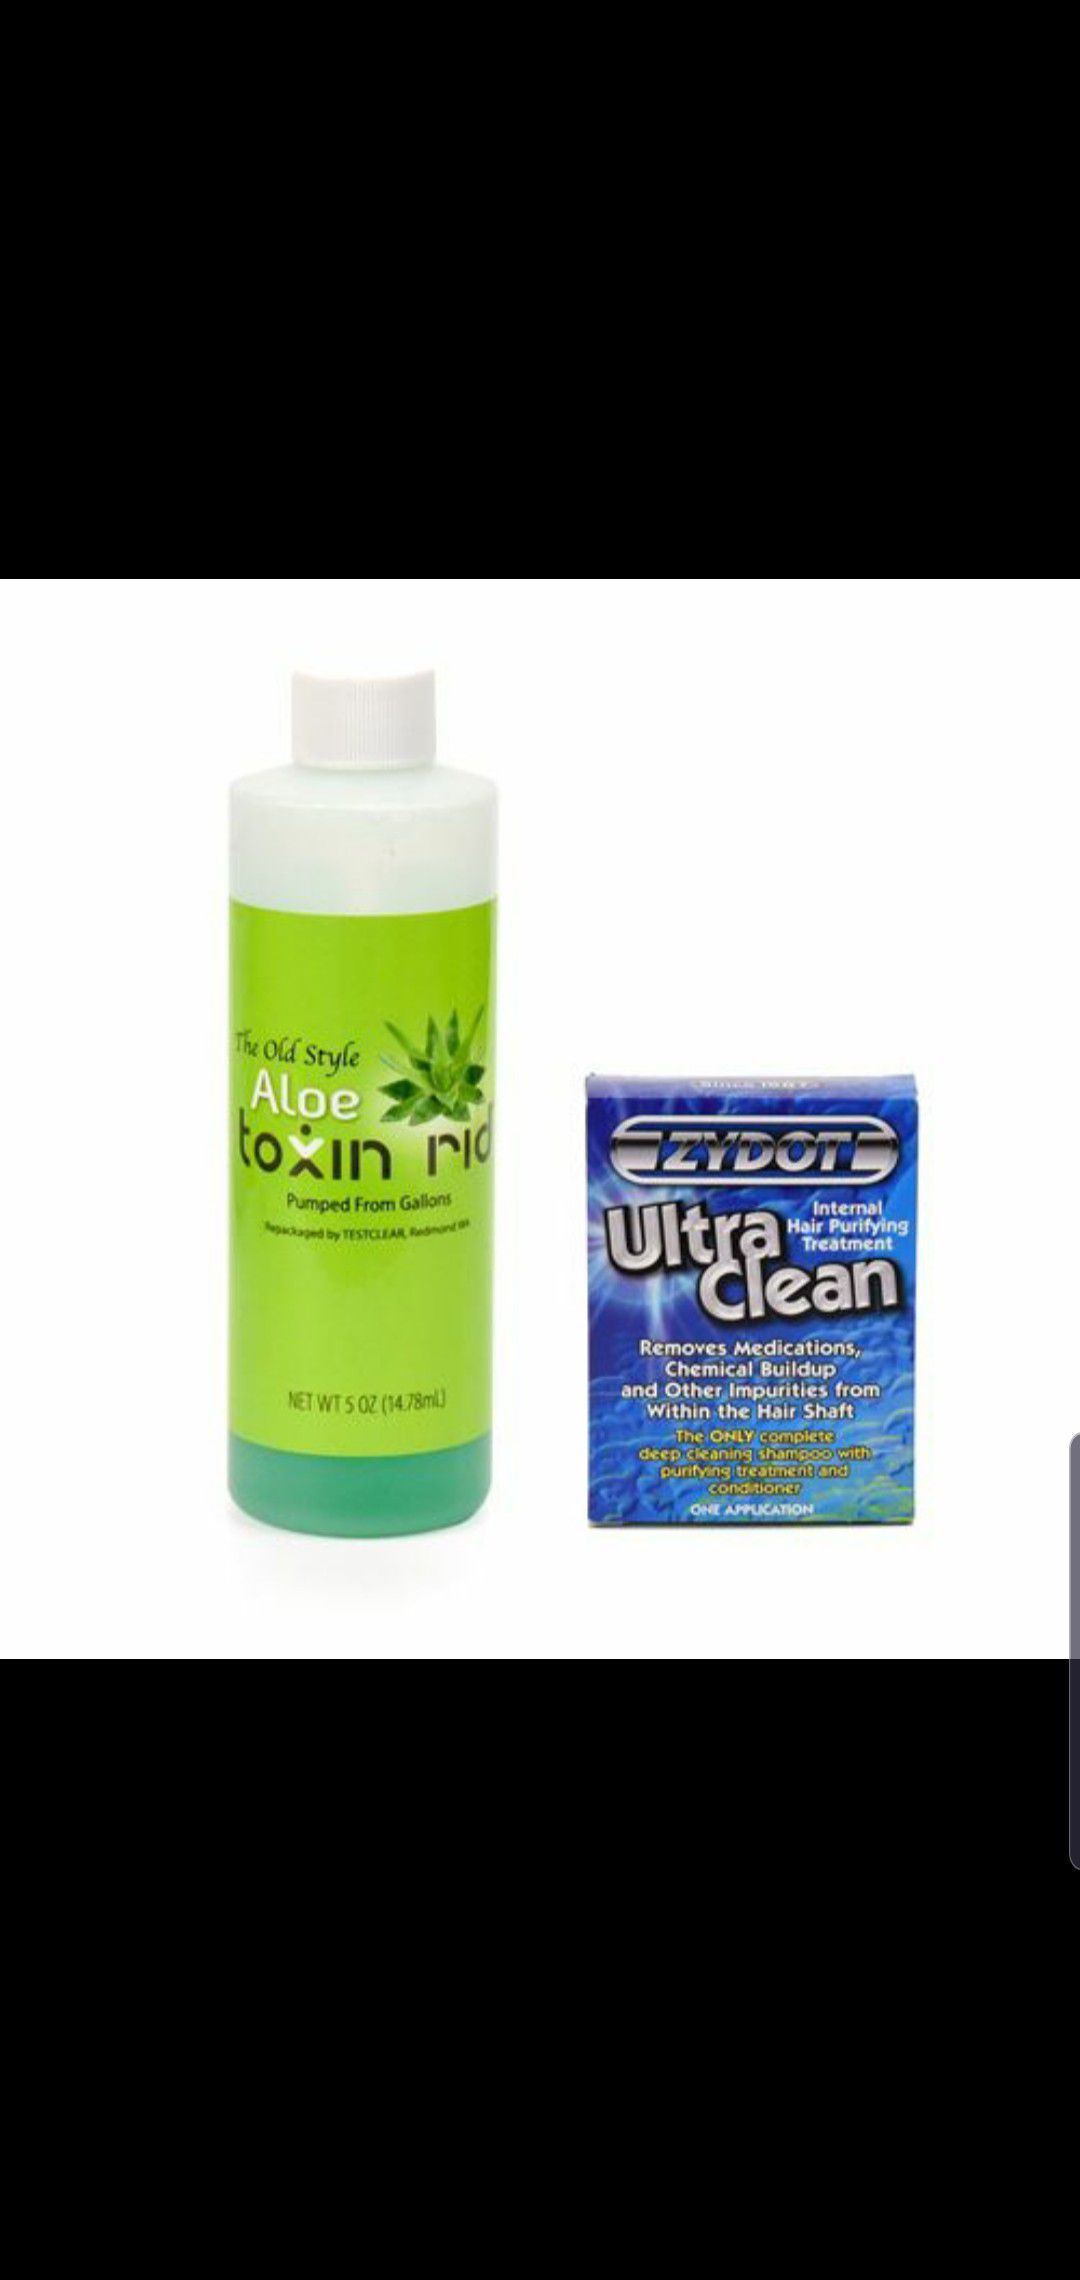 Old Style Aloe Toxin Rid Shampoo & Zydot Ultra Clean